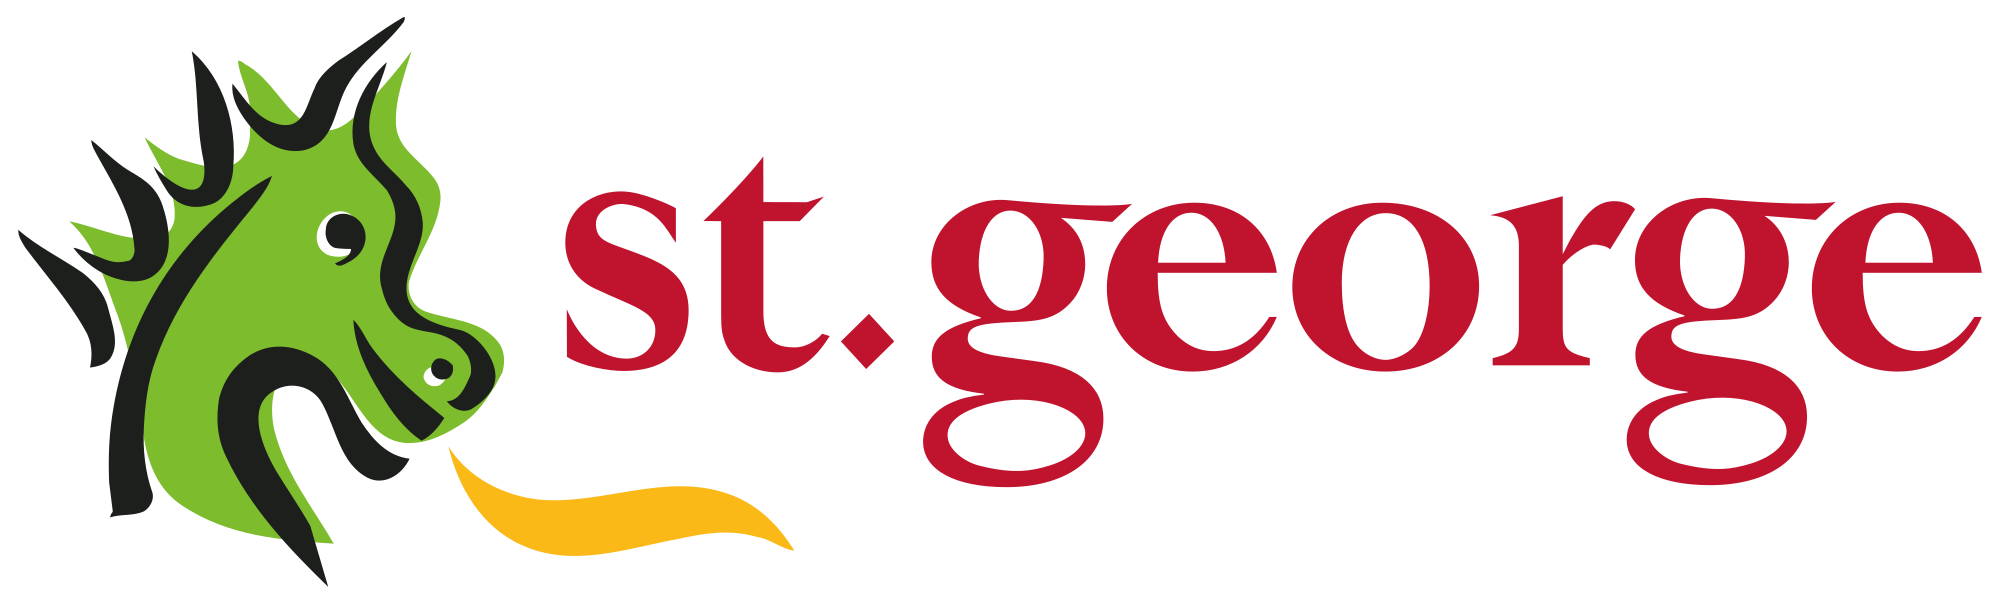 St.George Bank Brand Logo